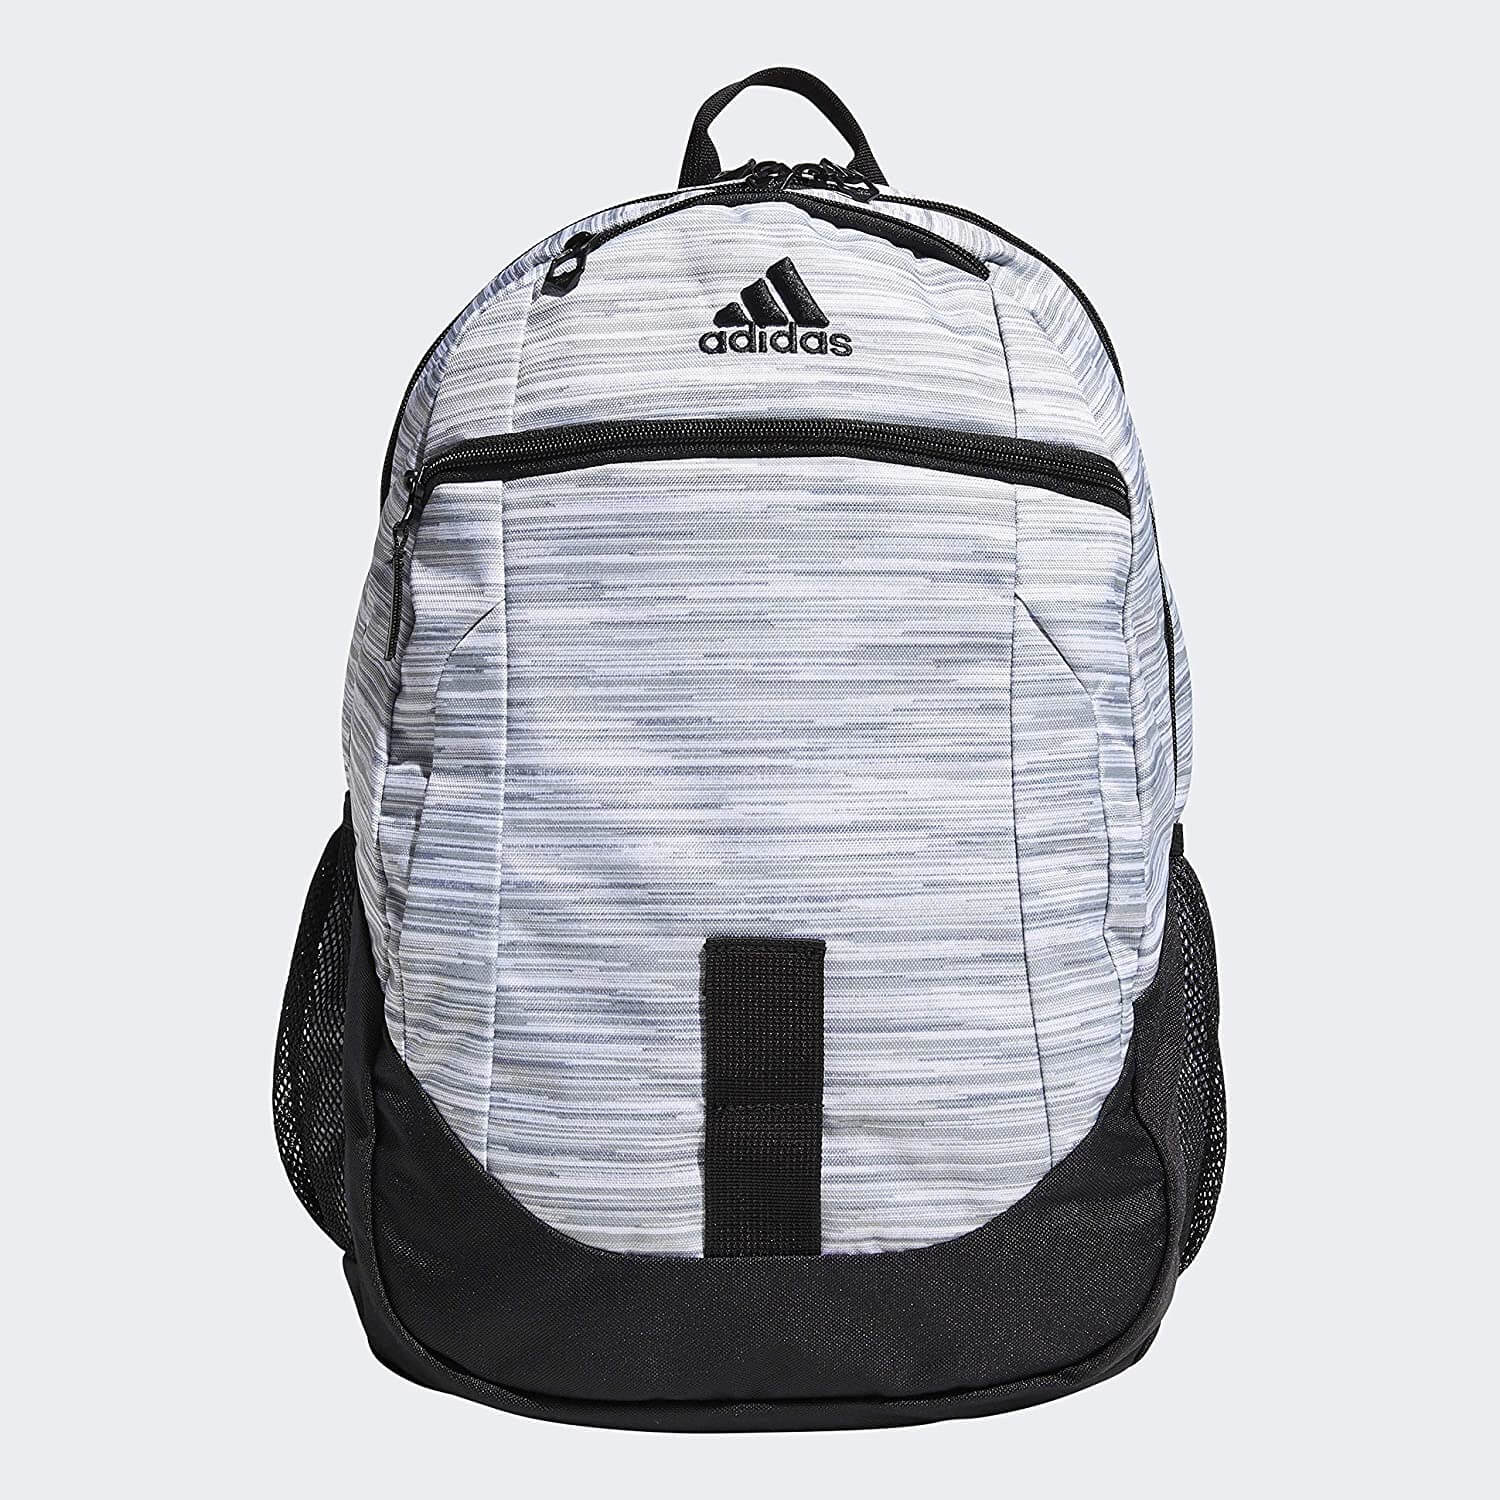 Adidas Foundation Backpack: Best travel backpacks for men